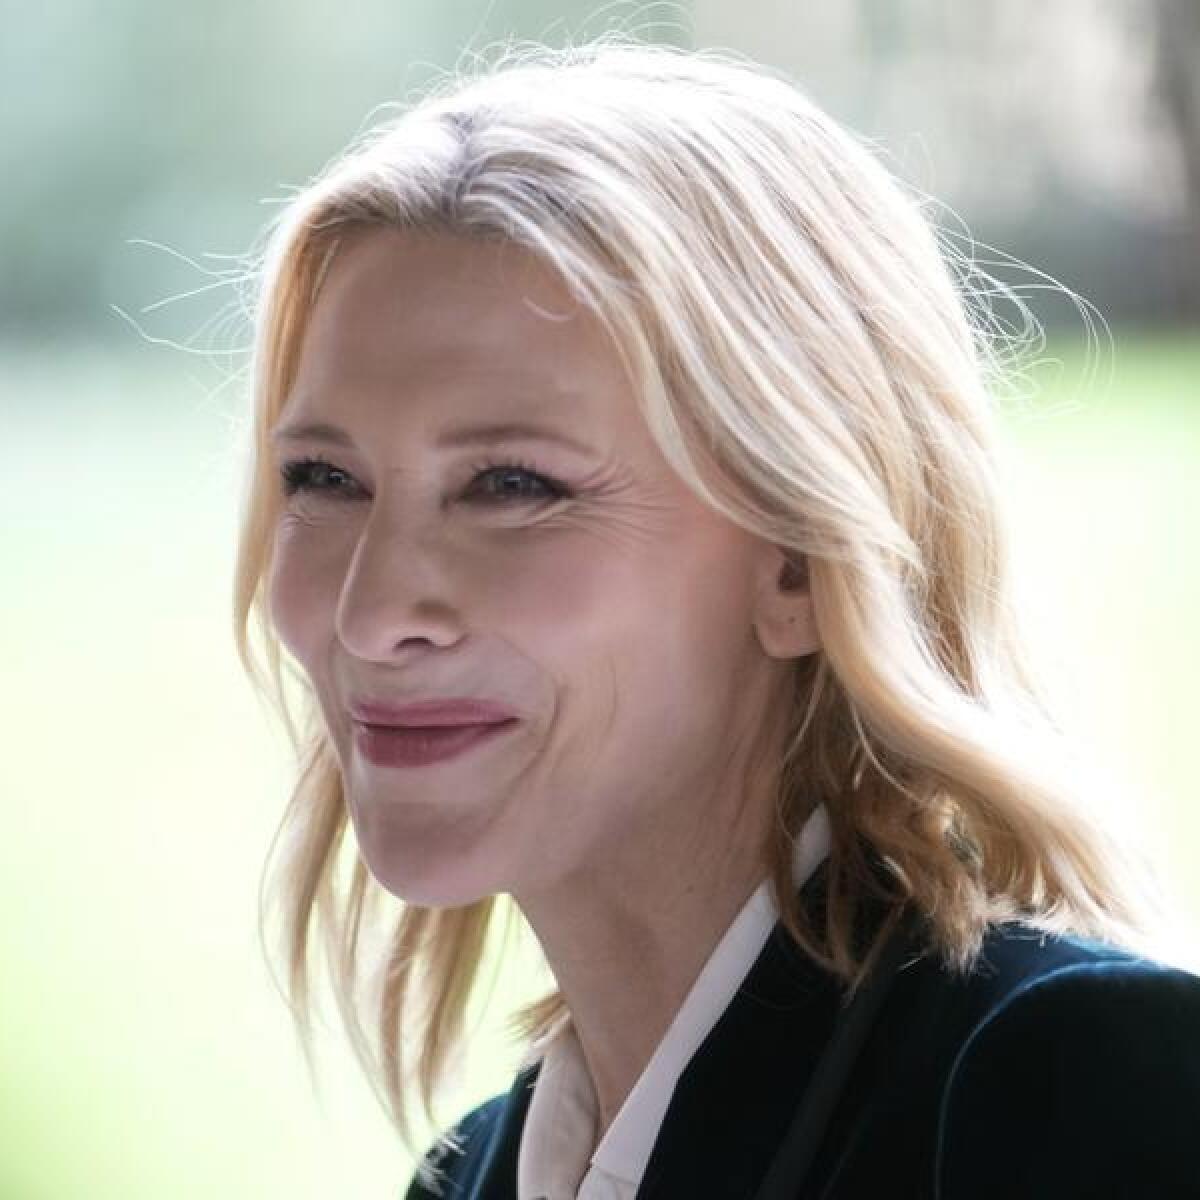 Australian actress Cate Blanchett